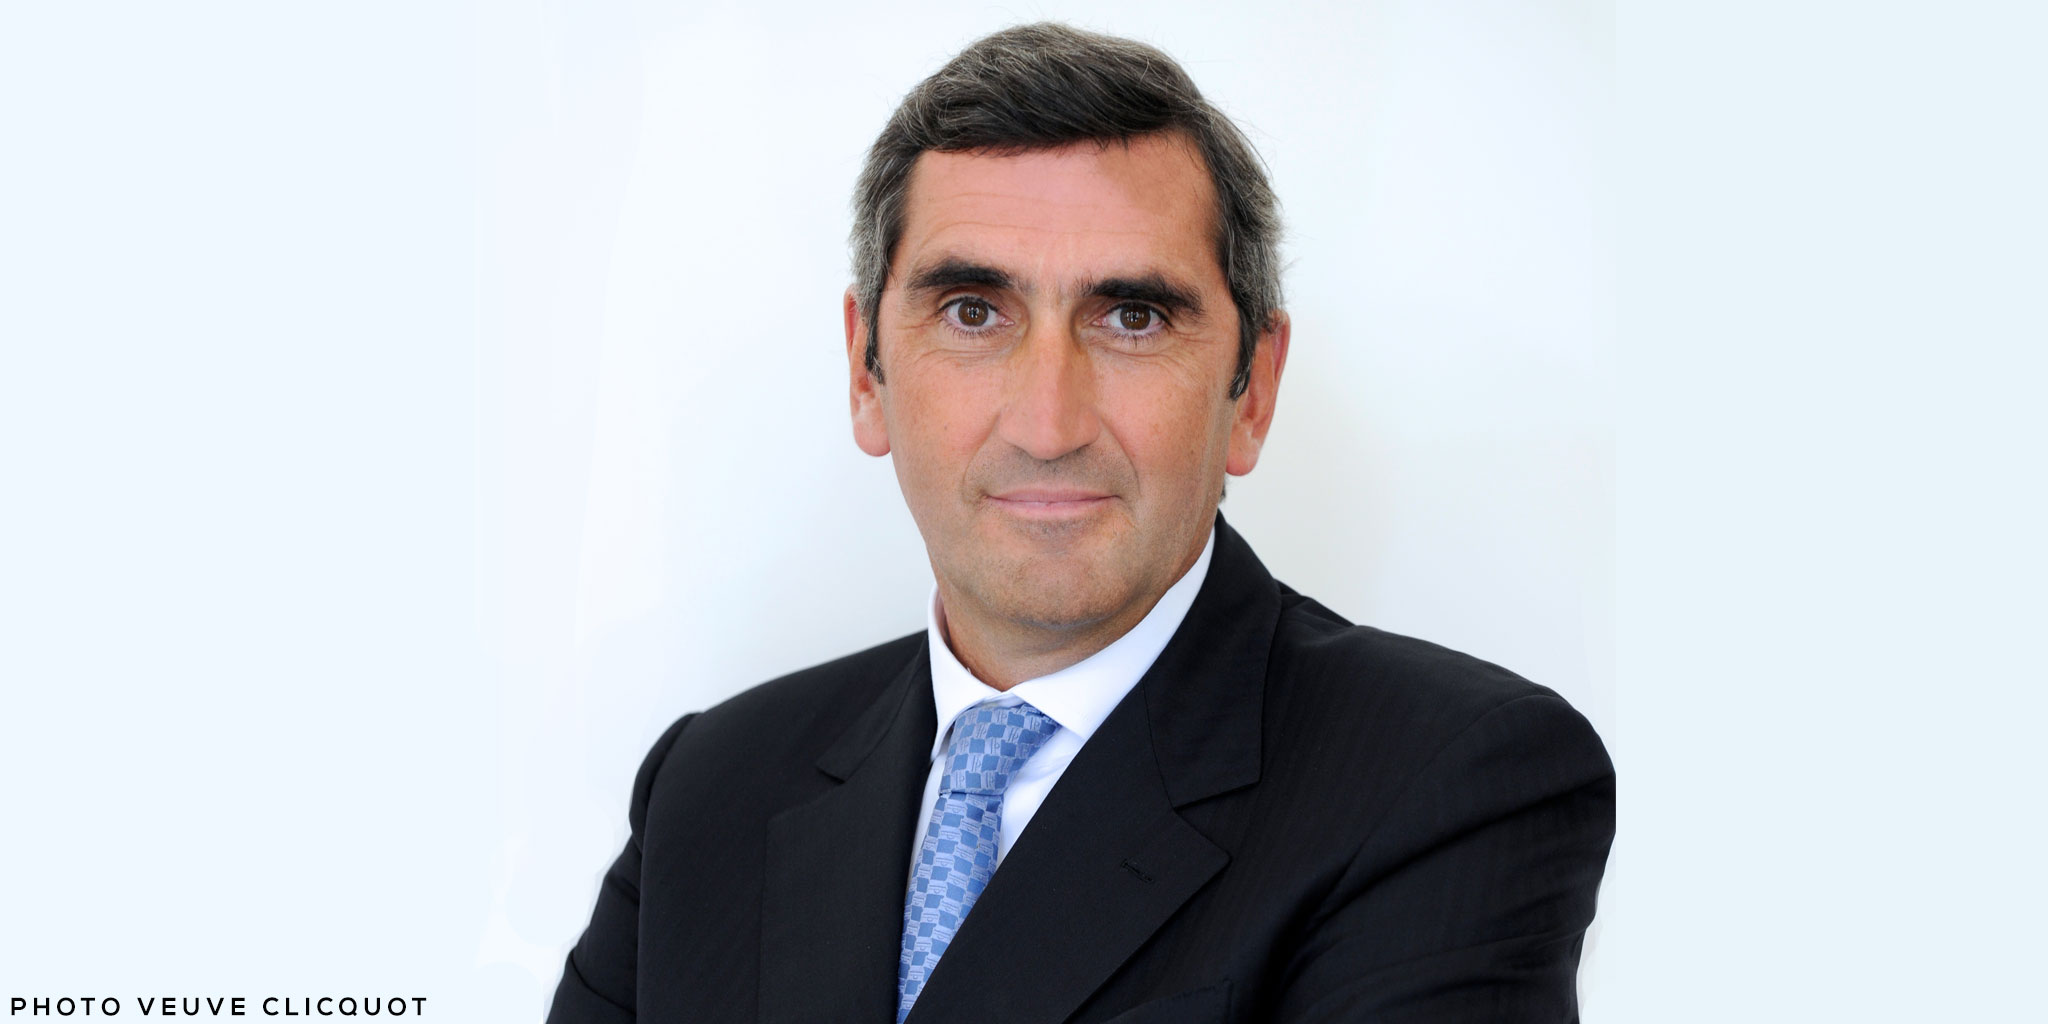 Jean-Marc Gallot President of Veuve Clicquot